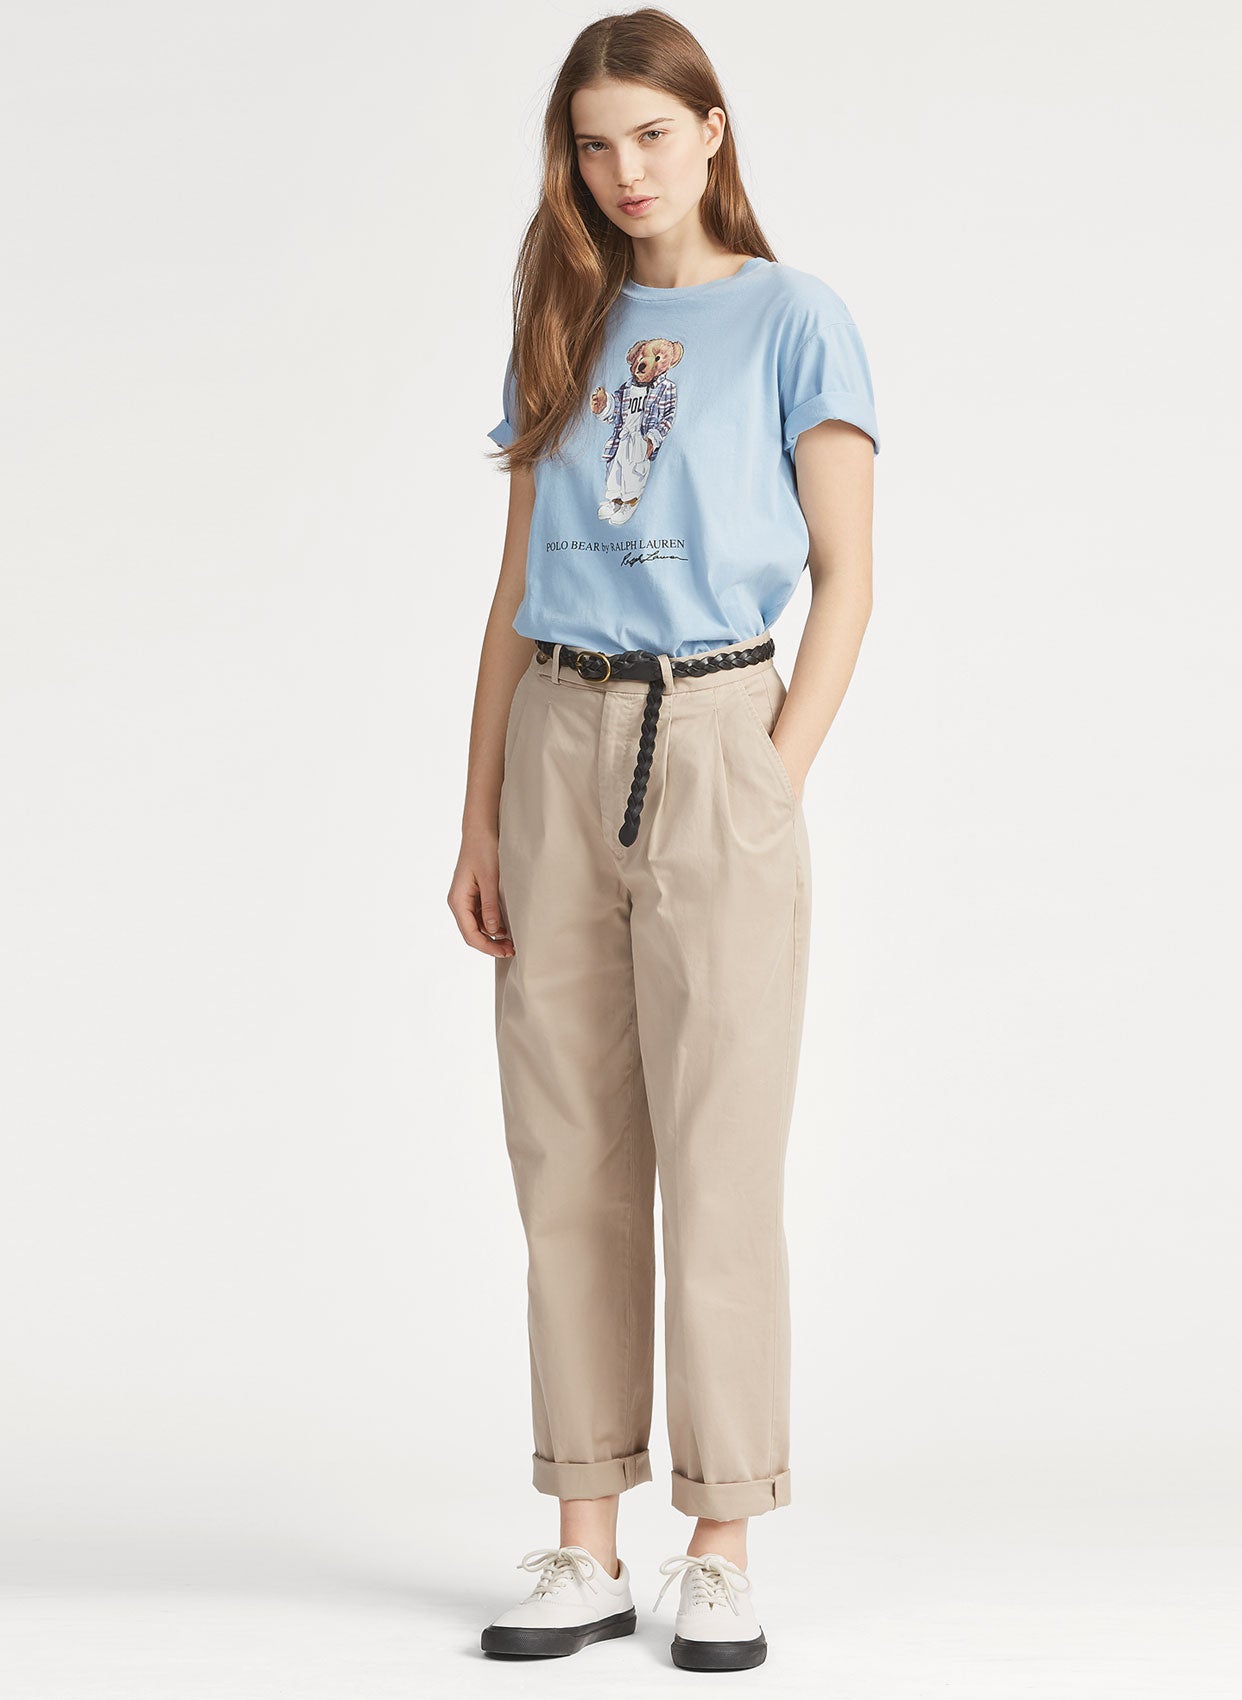 Polo Ralph Lauren Polo Bear T-shirt-Libas Trendy Fashion Store